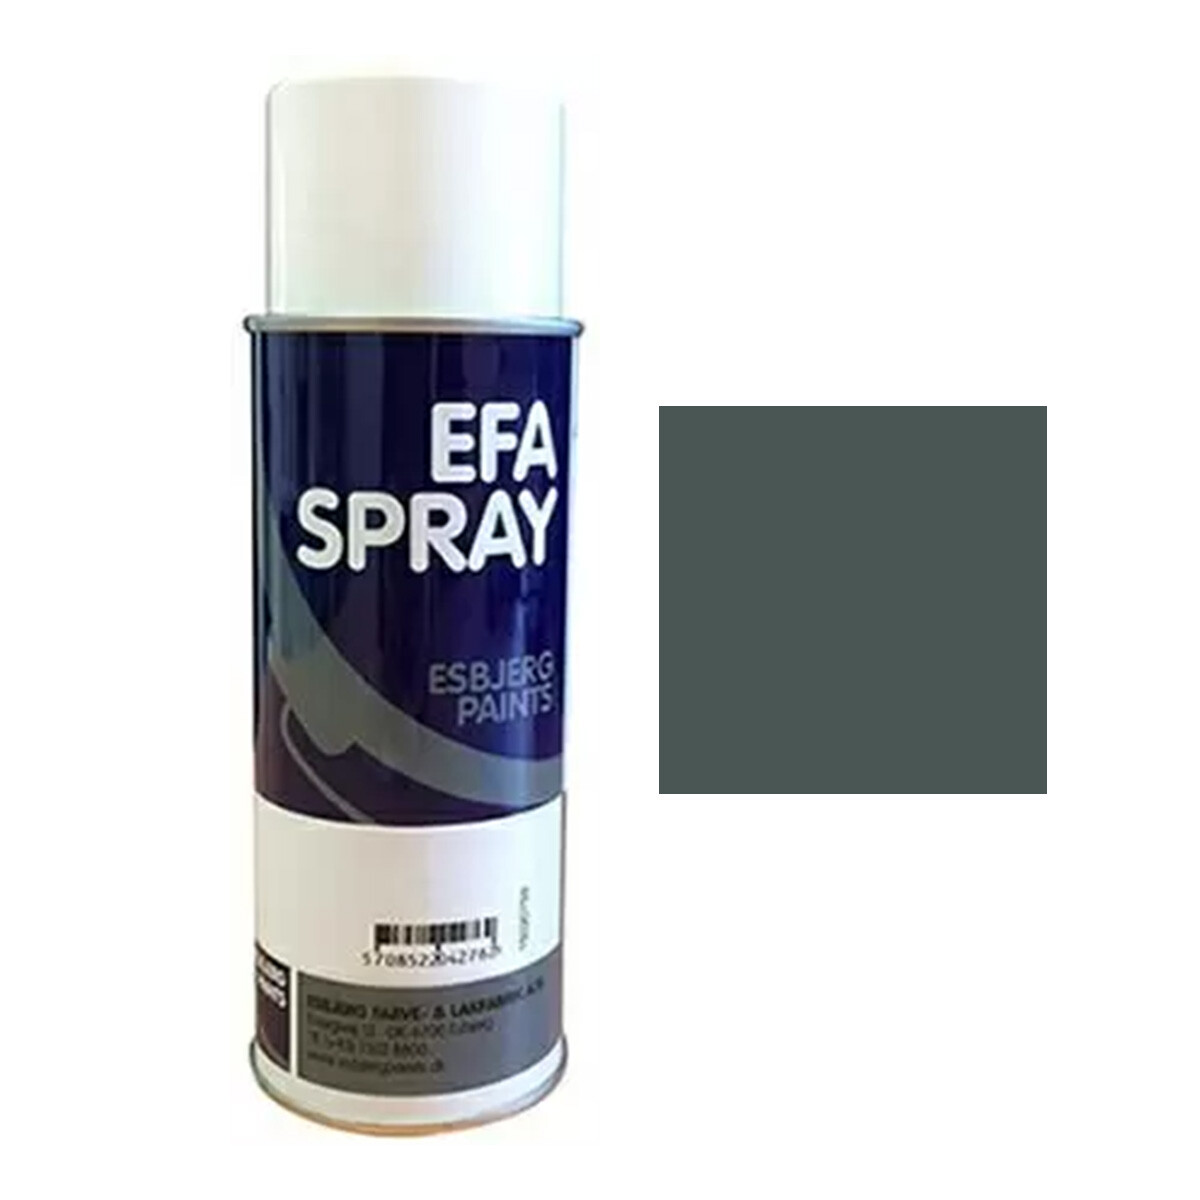 Se Esbjerg Paints Spray maling basaltgrå ral 7012 400ml hos Specialbutikken